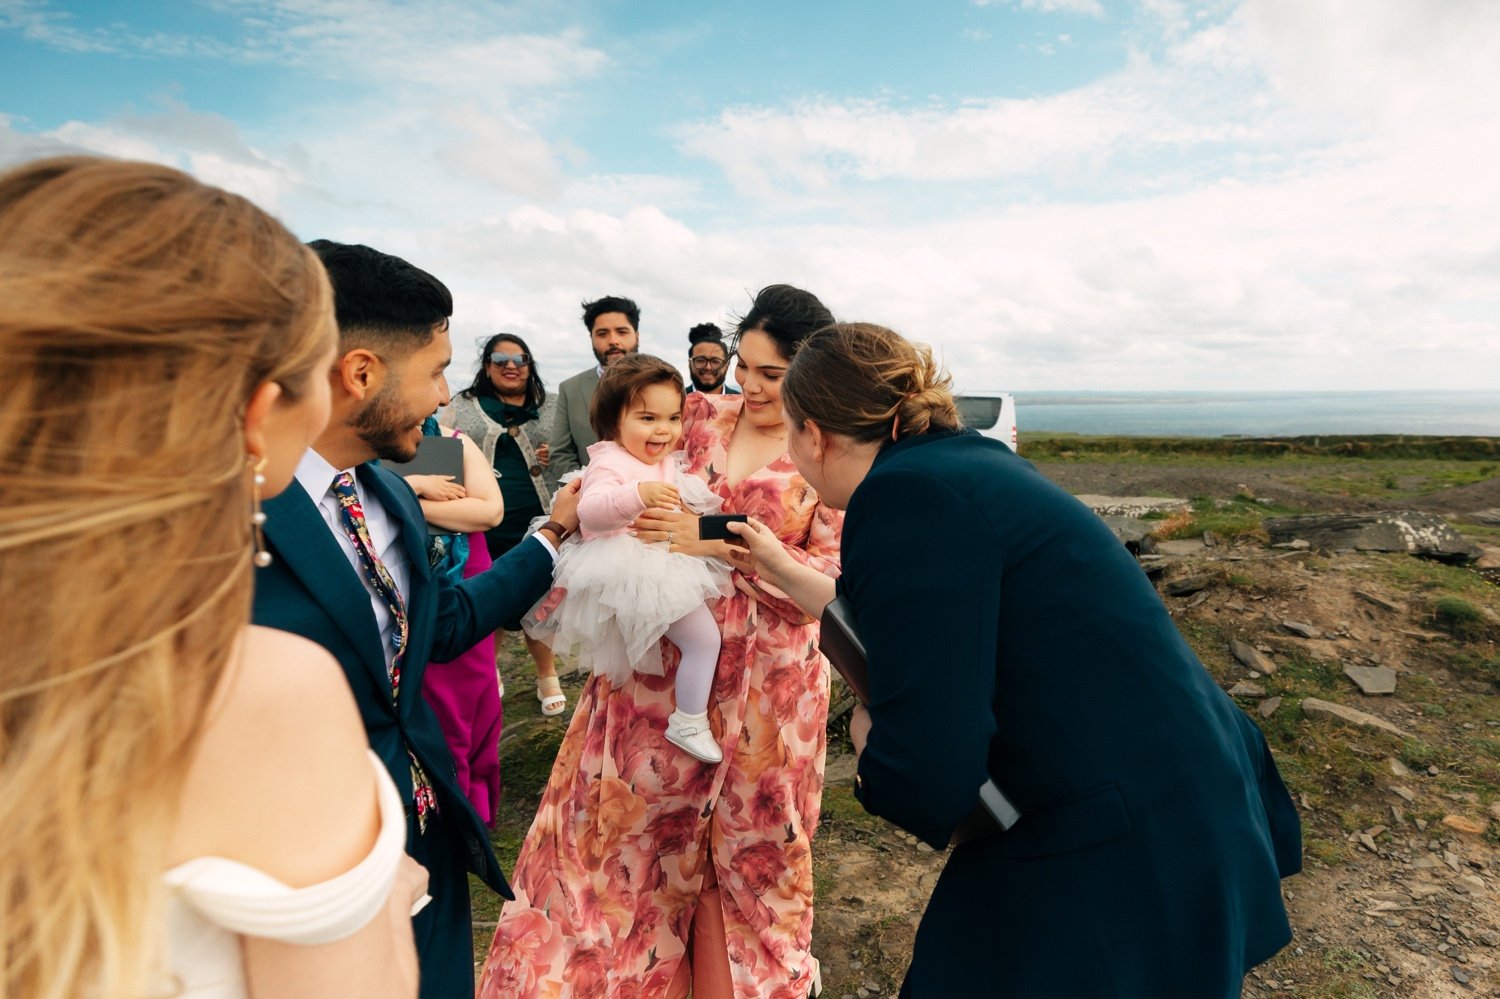 35_Ireland-cliff-elopement-wedding-photographer-kmp-photography-9427.jpg